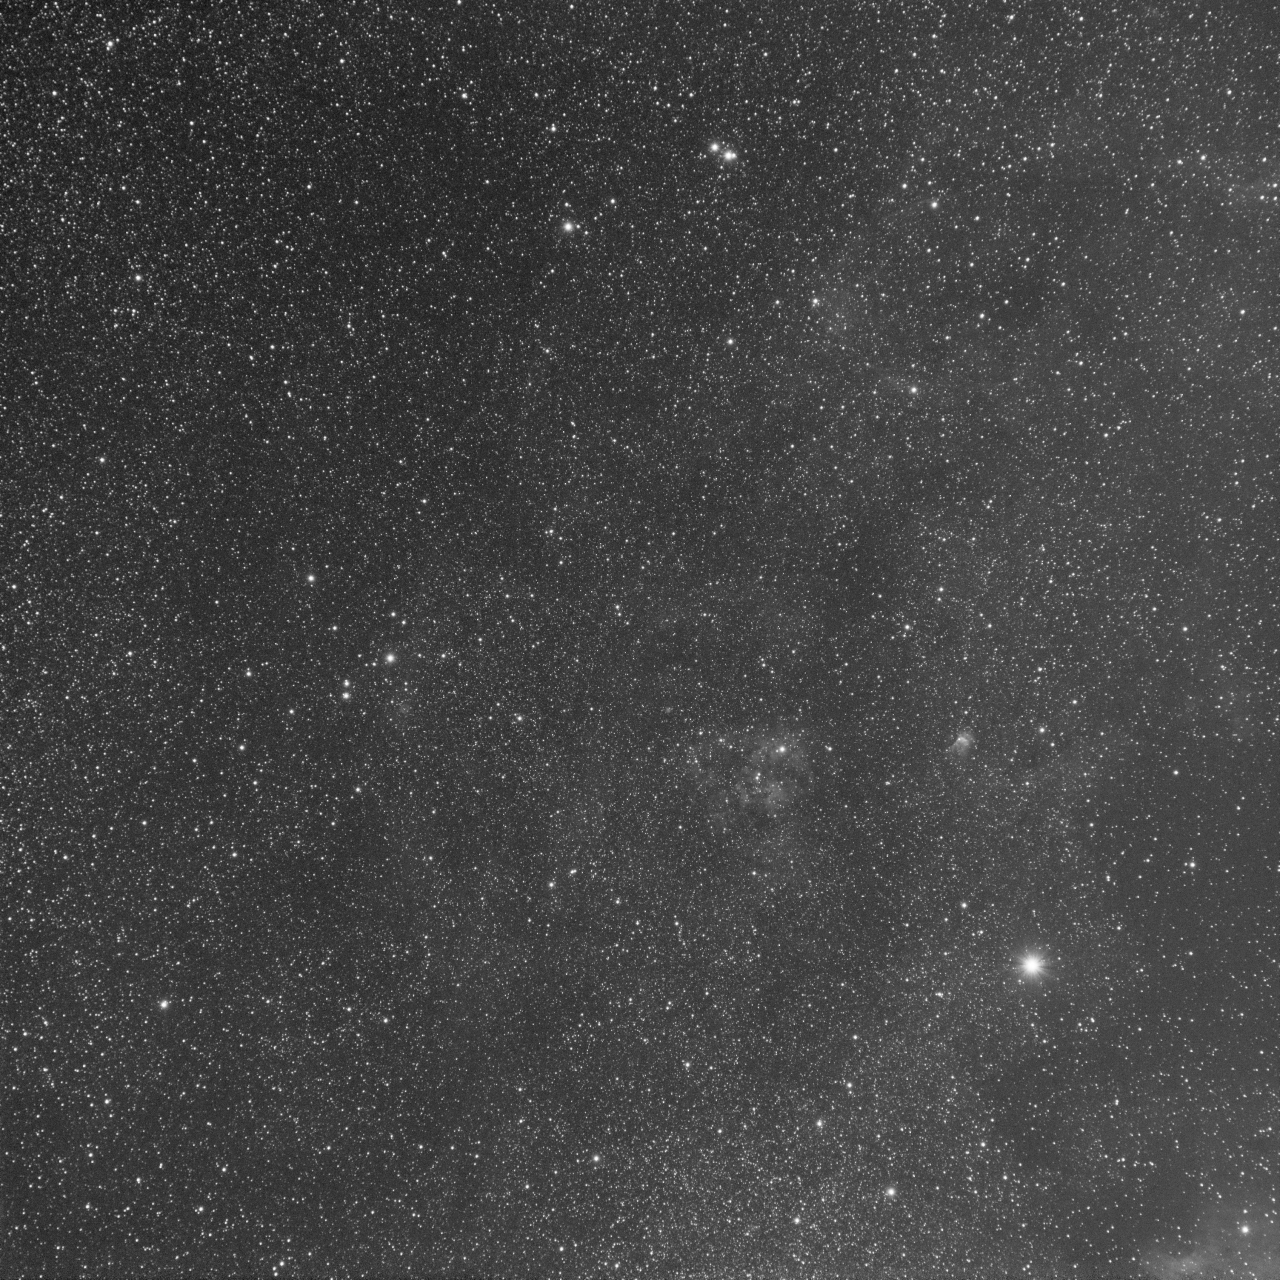 Cygnus near Sh2-115 - Oiii